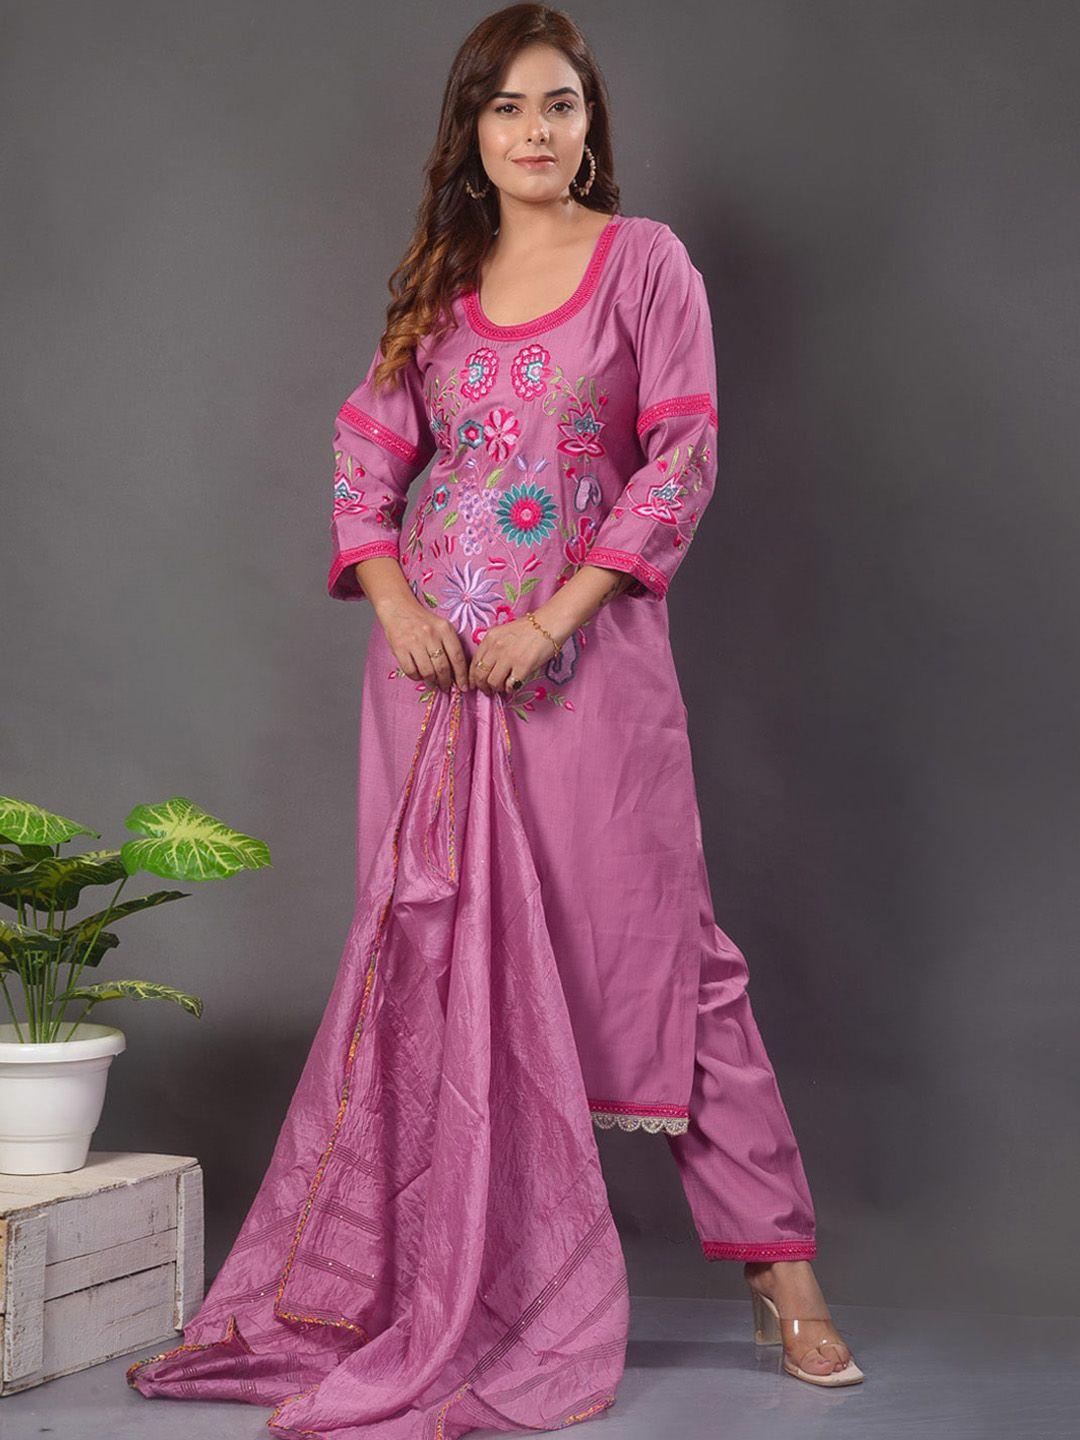 clora creation women pink floral embroidered regular kurta with palazzos & with dupatta